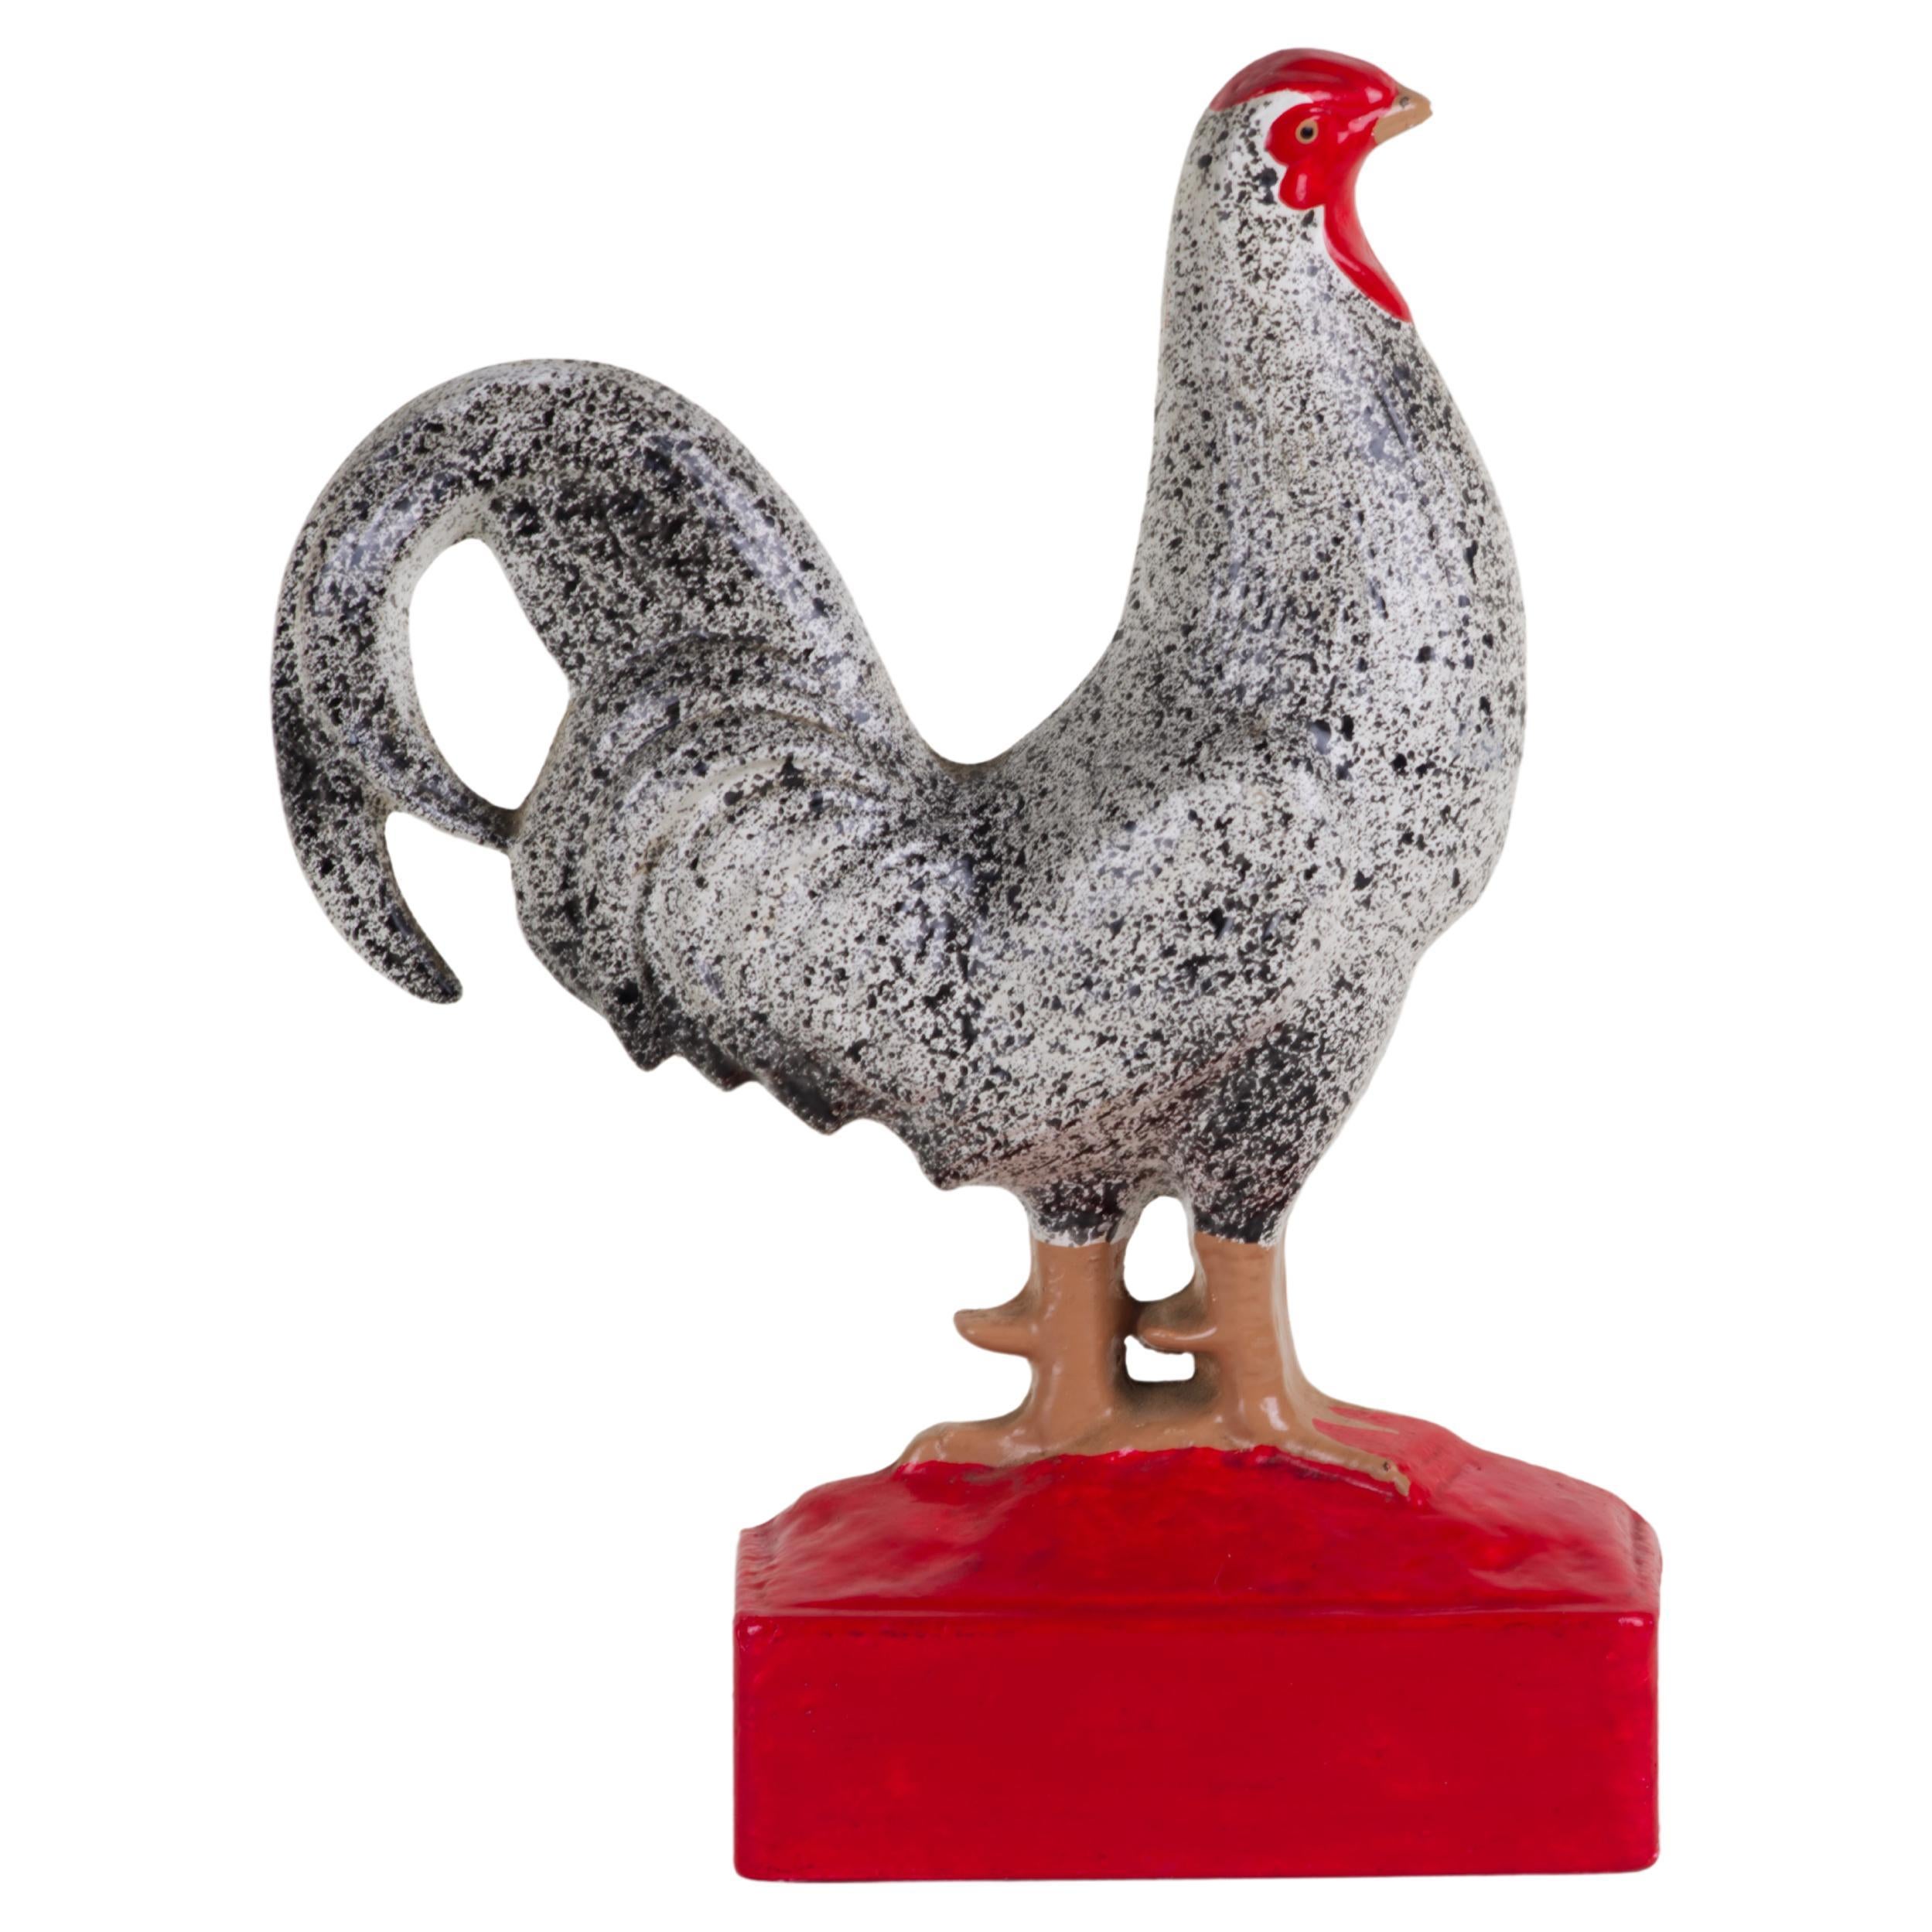 Cast Iron Enameled Chicken Figurine, Decor or Doorstop, Vintage, England.